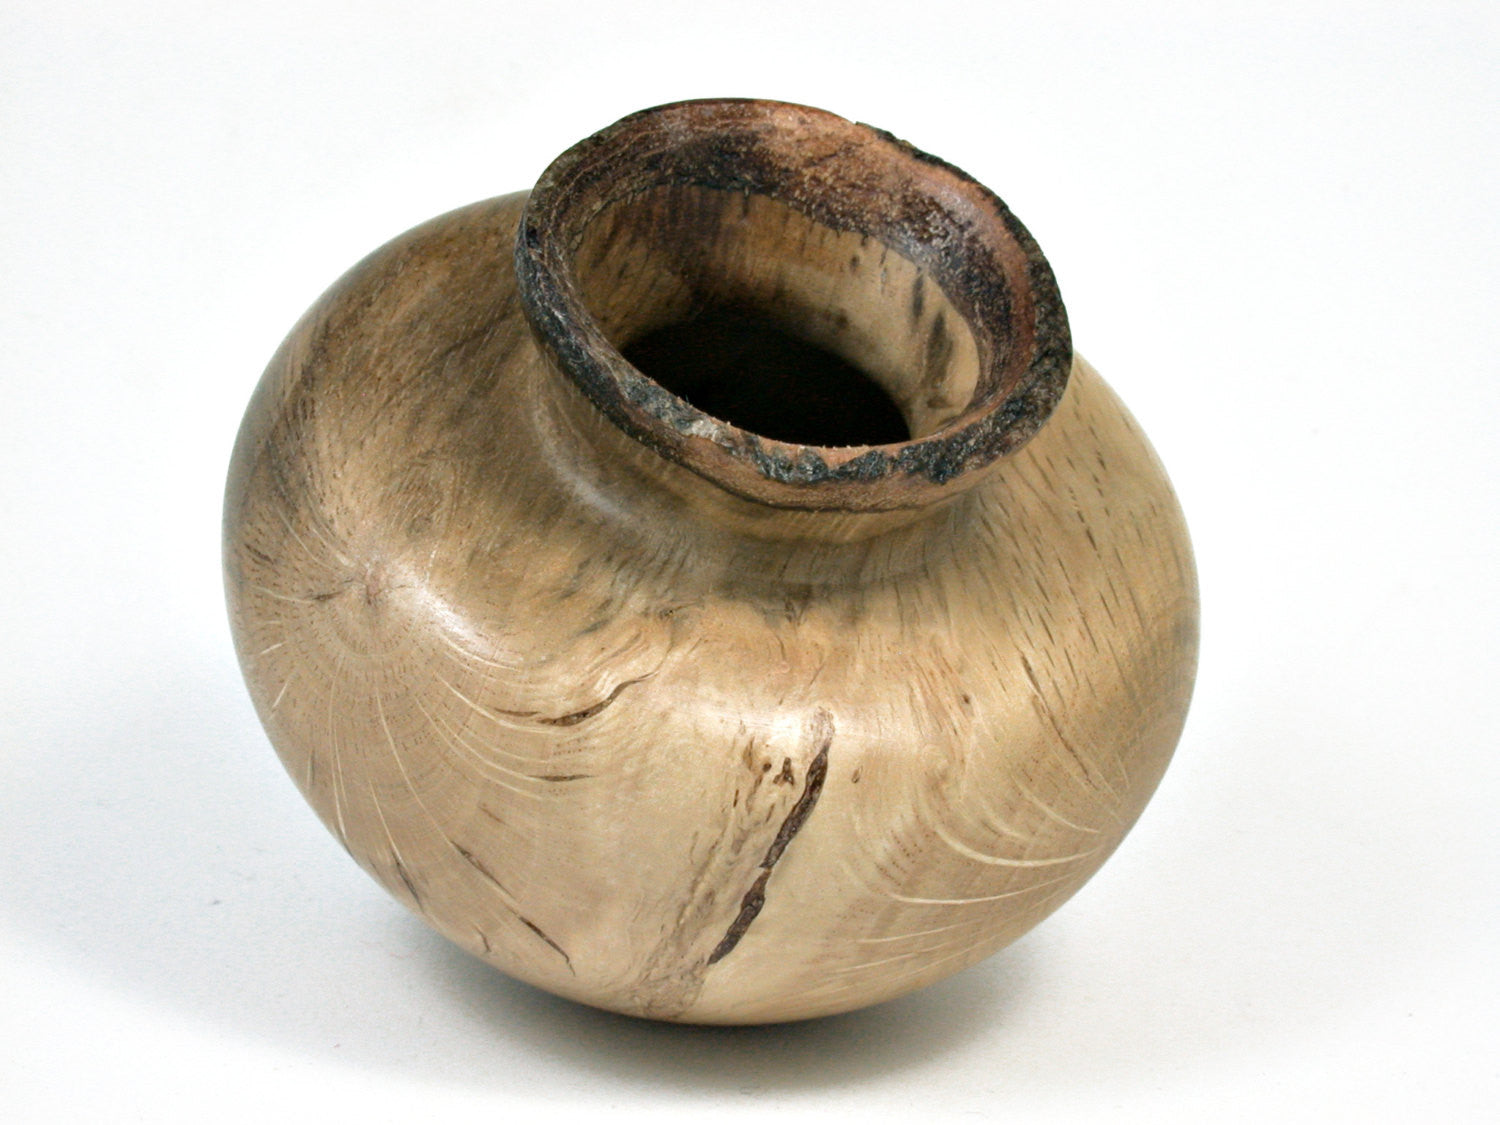 LV-1794 Coast Live Oak Wood Turned Vessel, Weed Pot, Hollow Form, Vase with Natural Edge